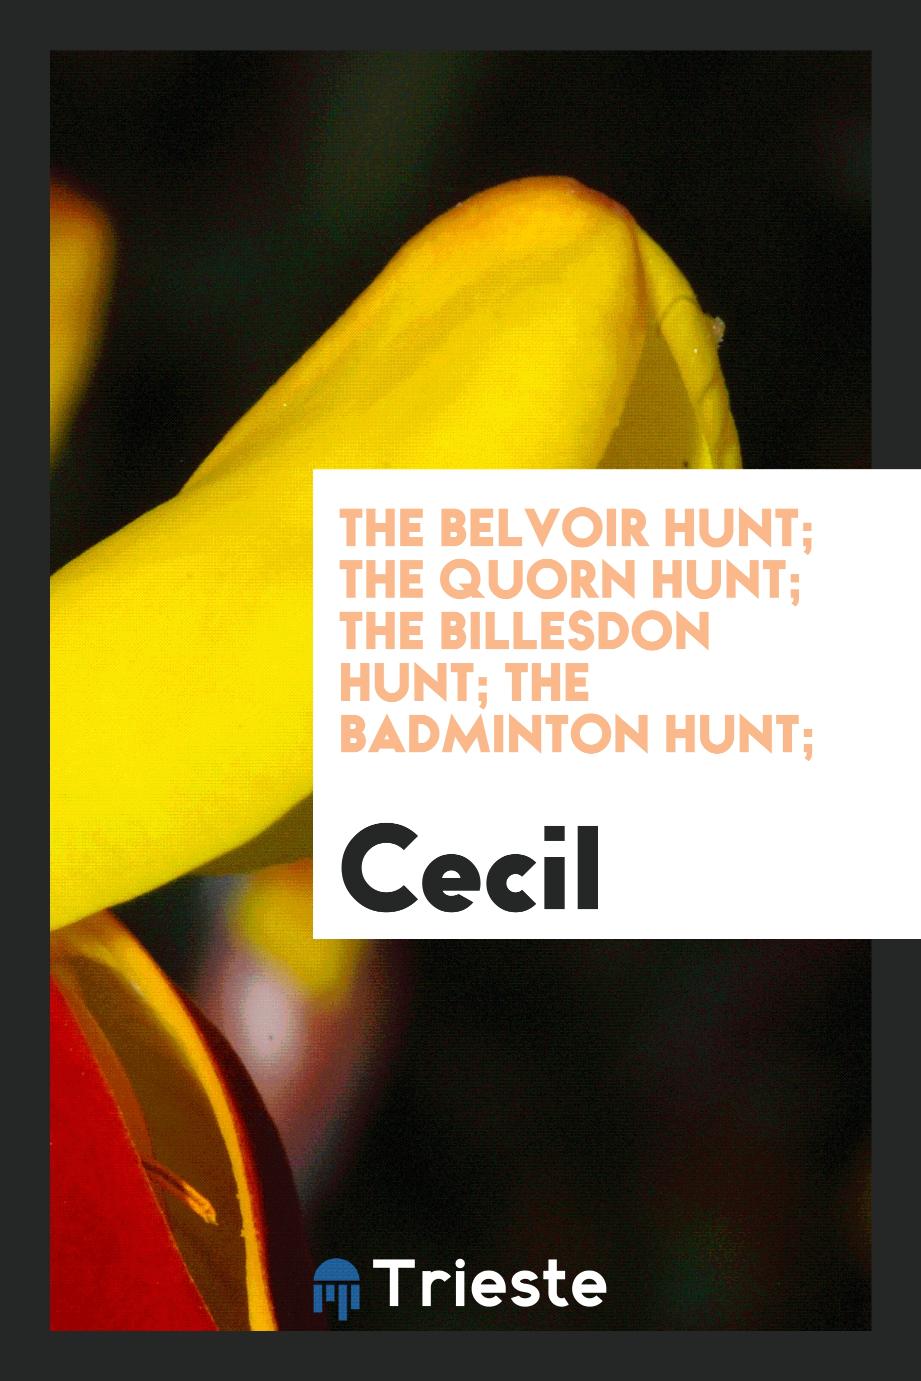 The Belvoir hunt; The Quorn hunt; The Billesdon Hunt; The Badminton hunt;